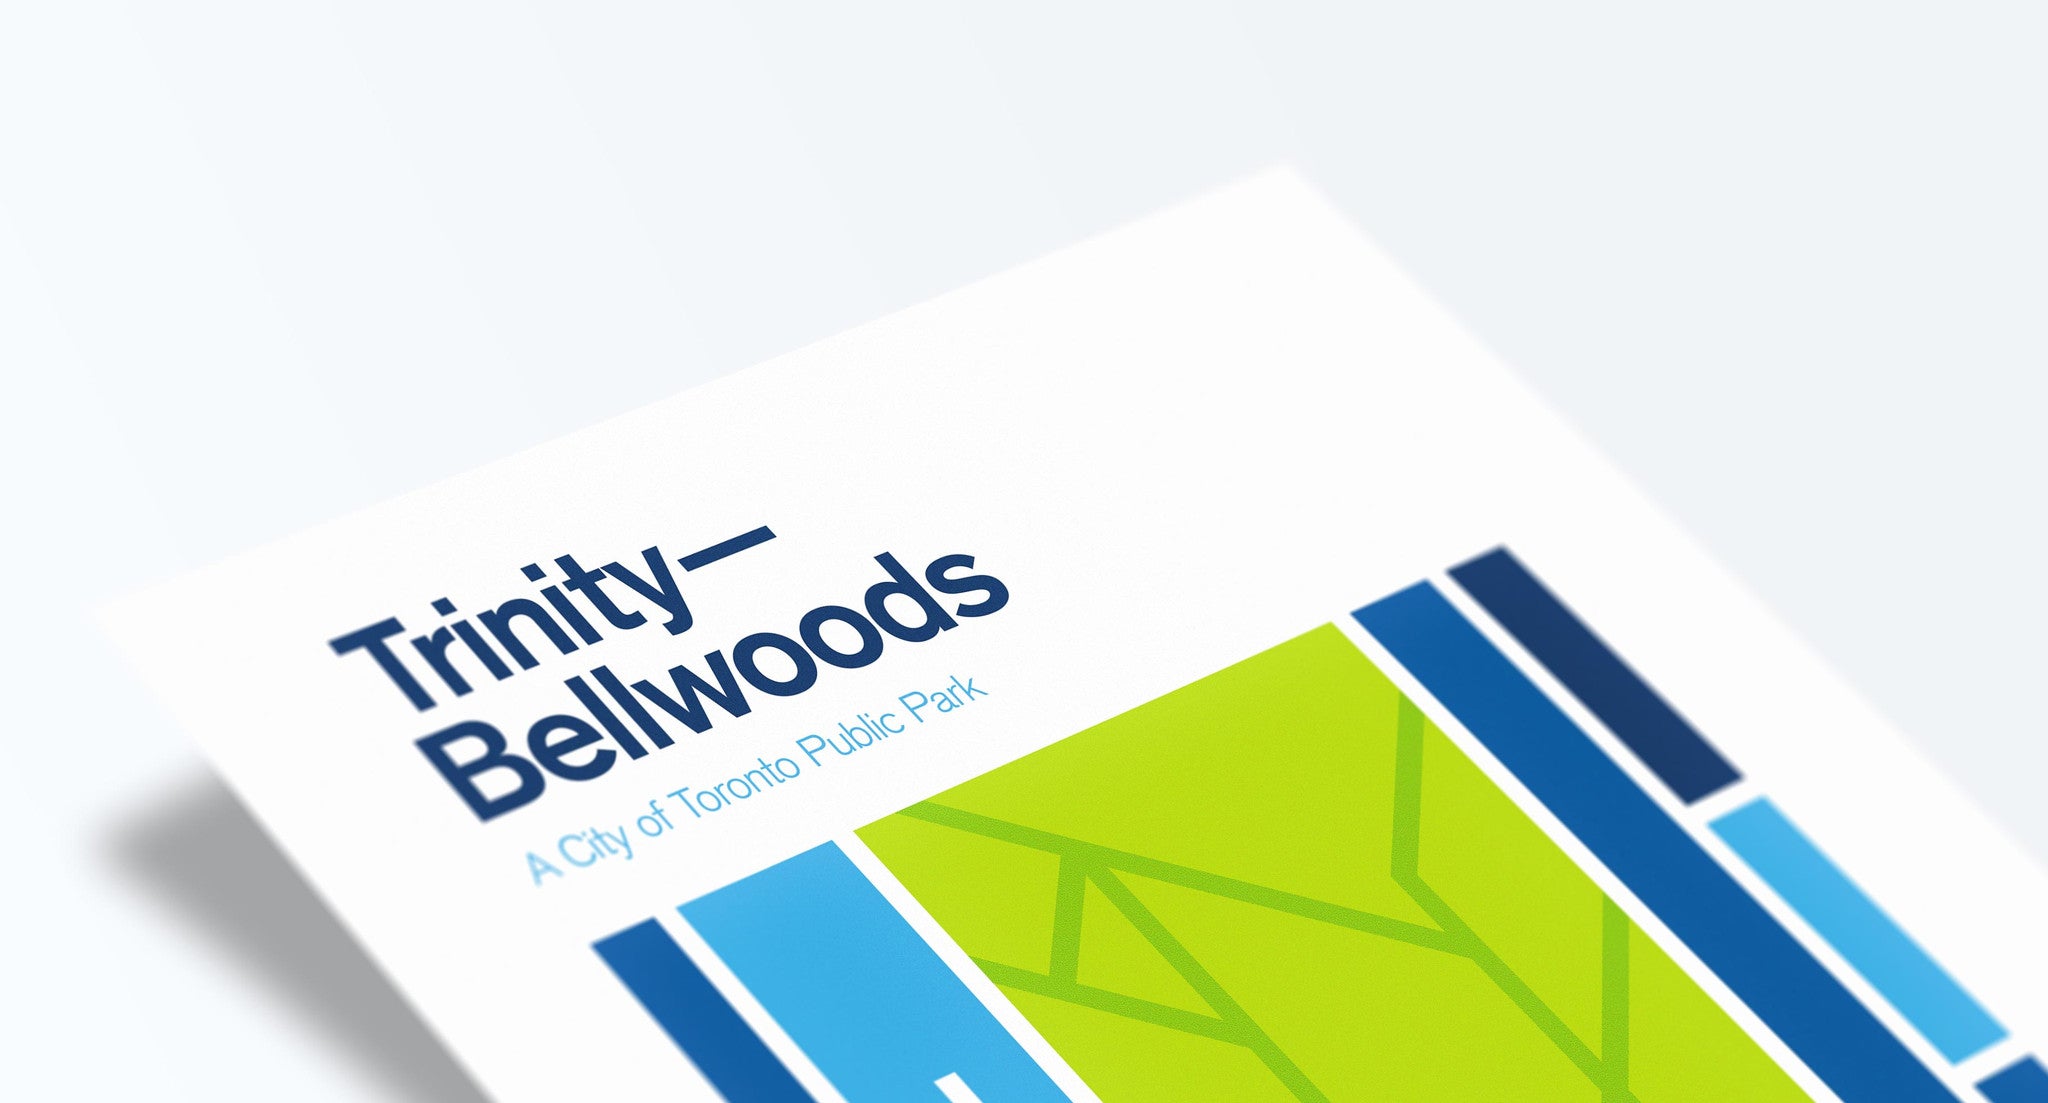 Trinity-Bellwoods